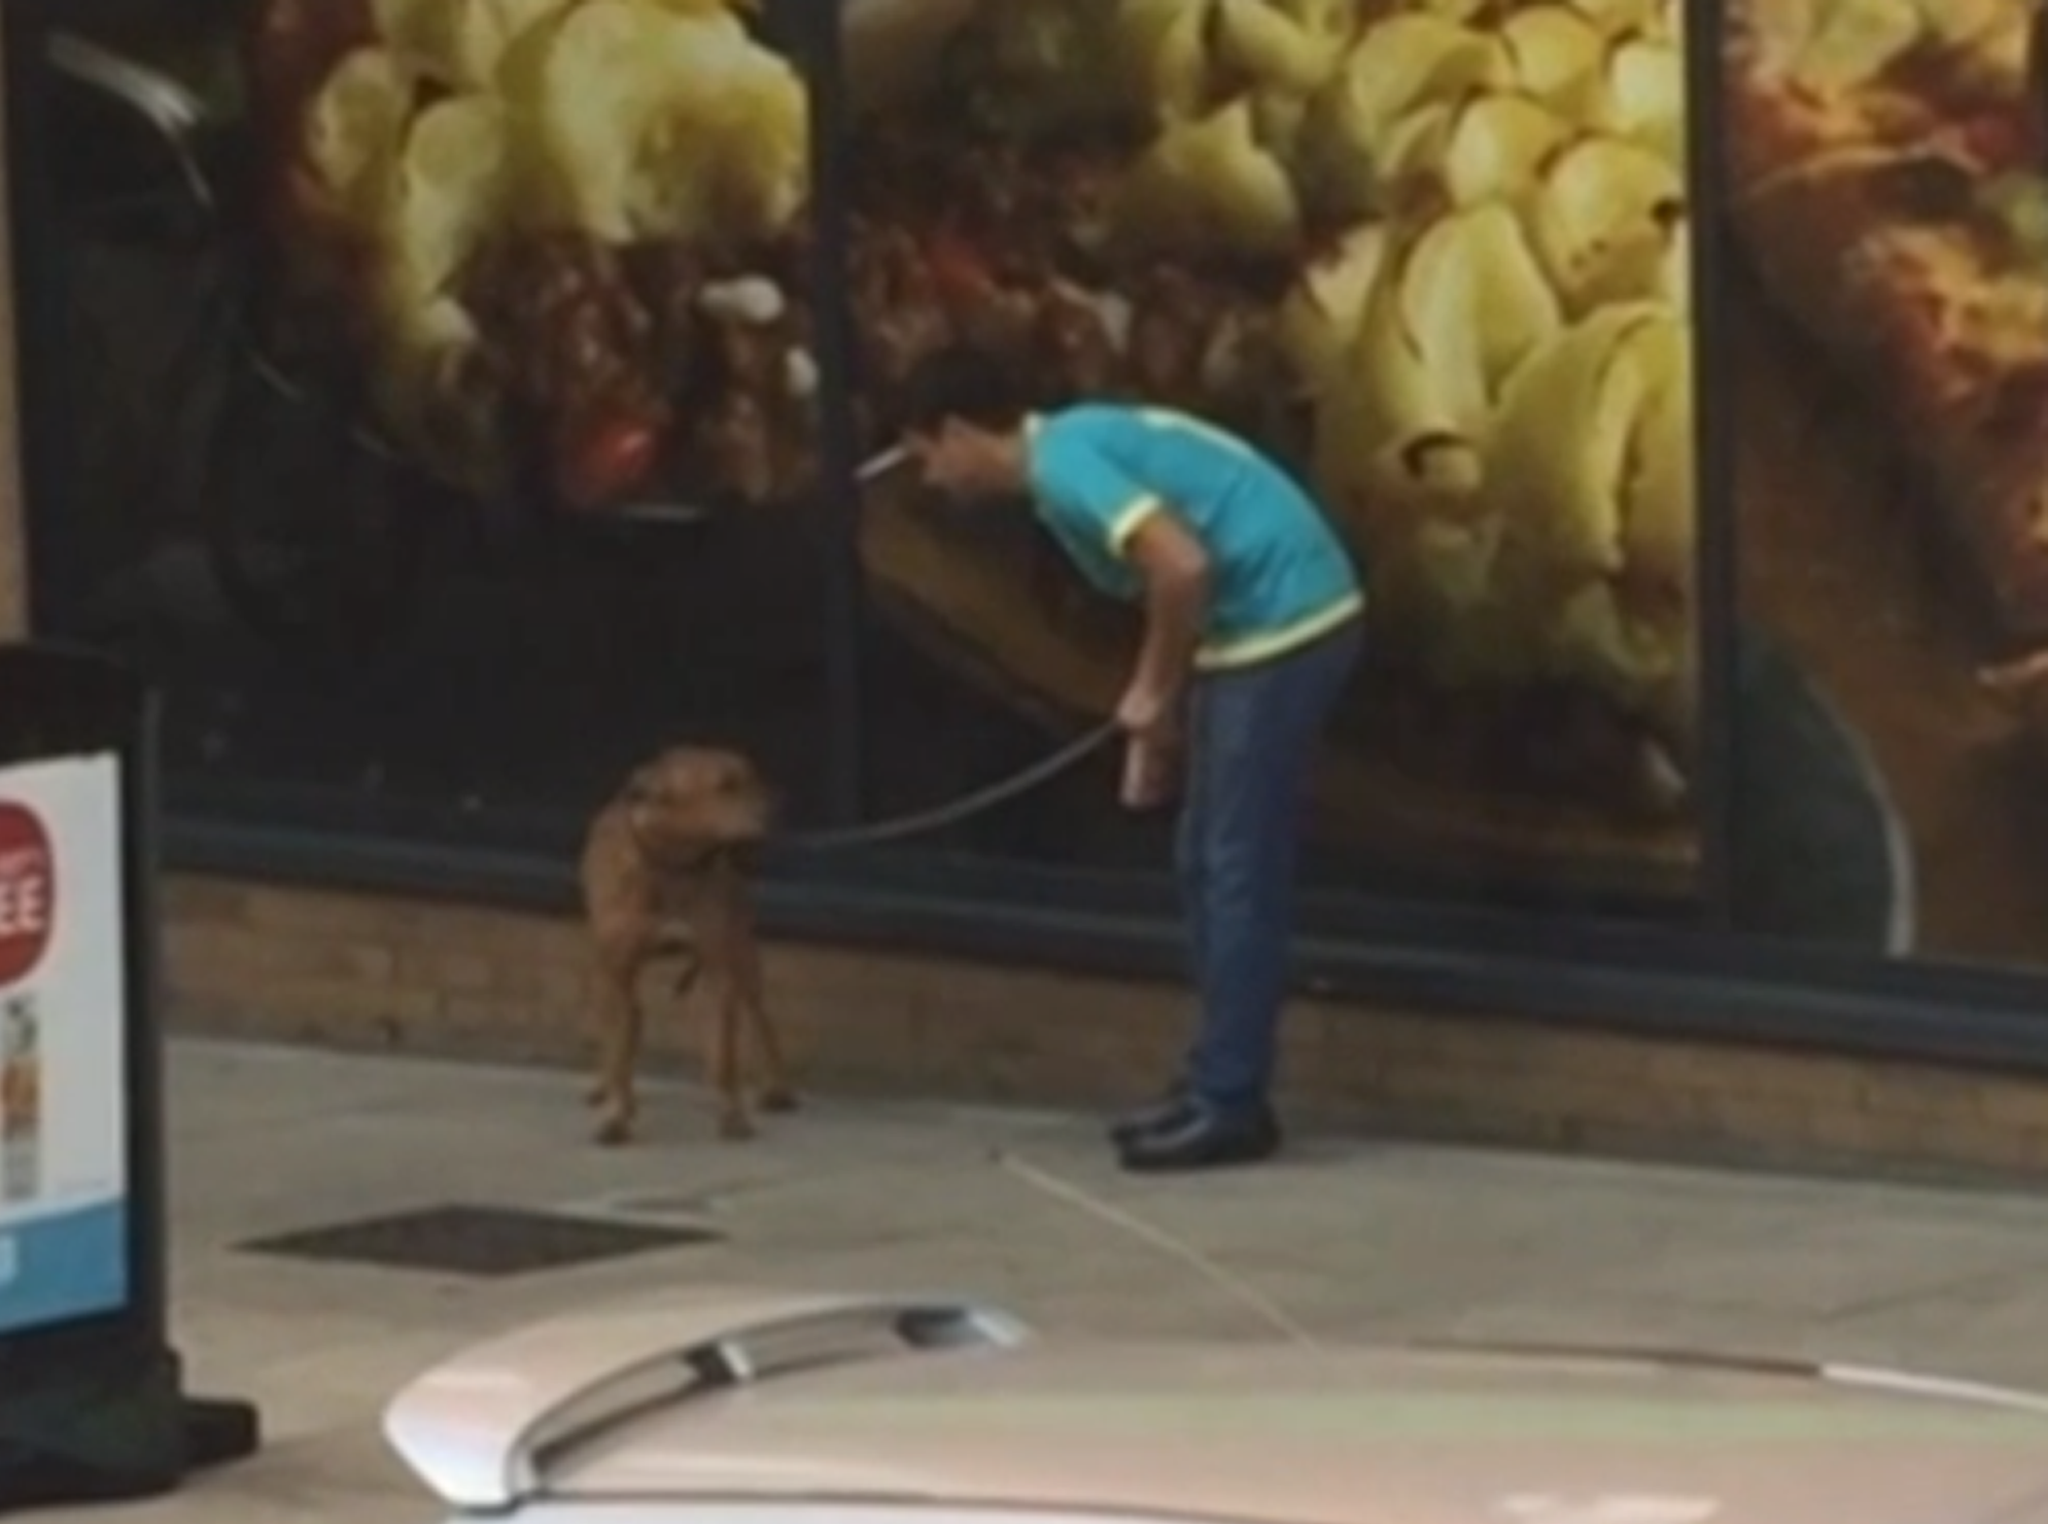 Man caught on camera punching dog outside London